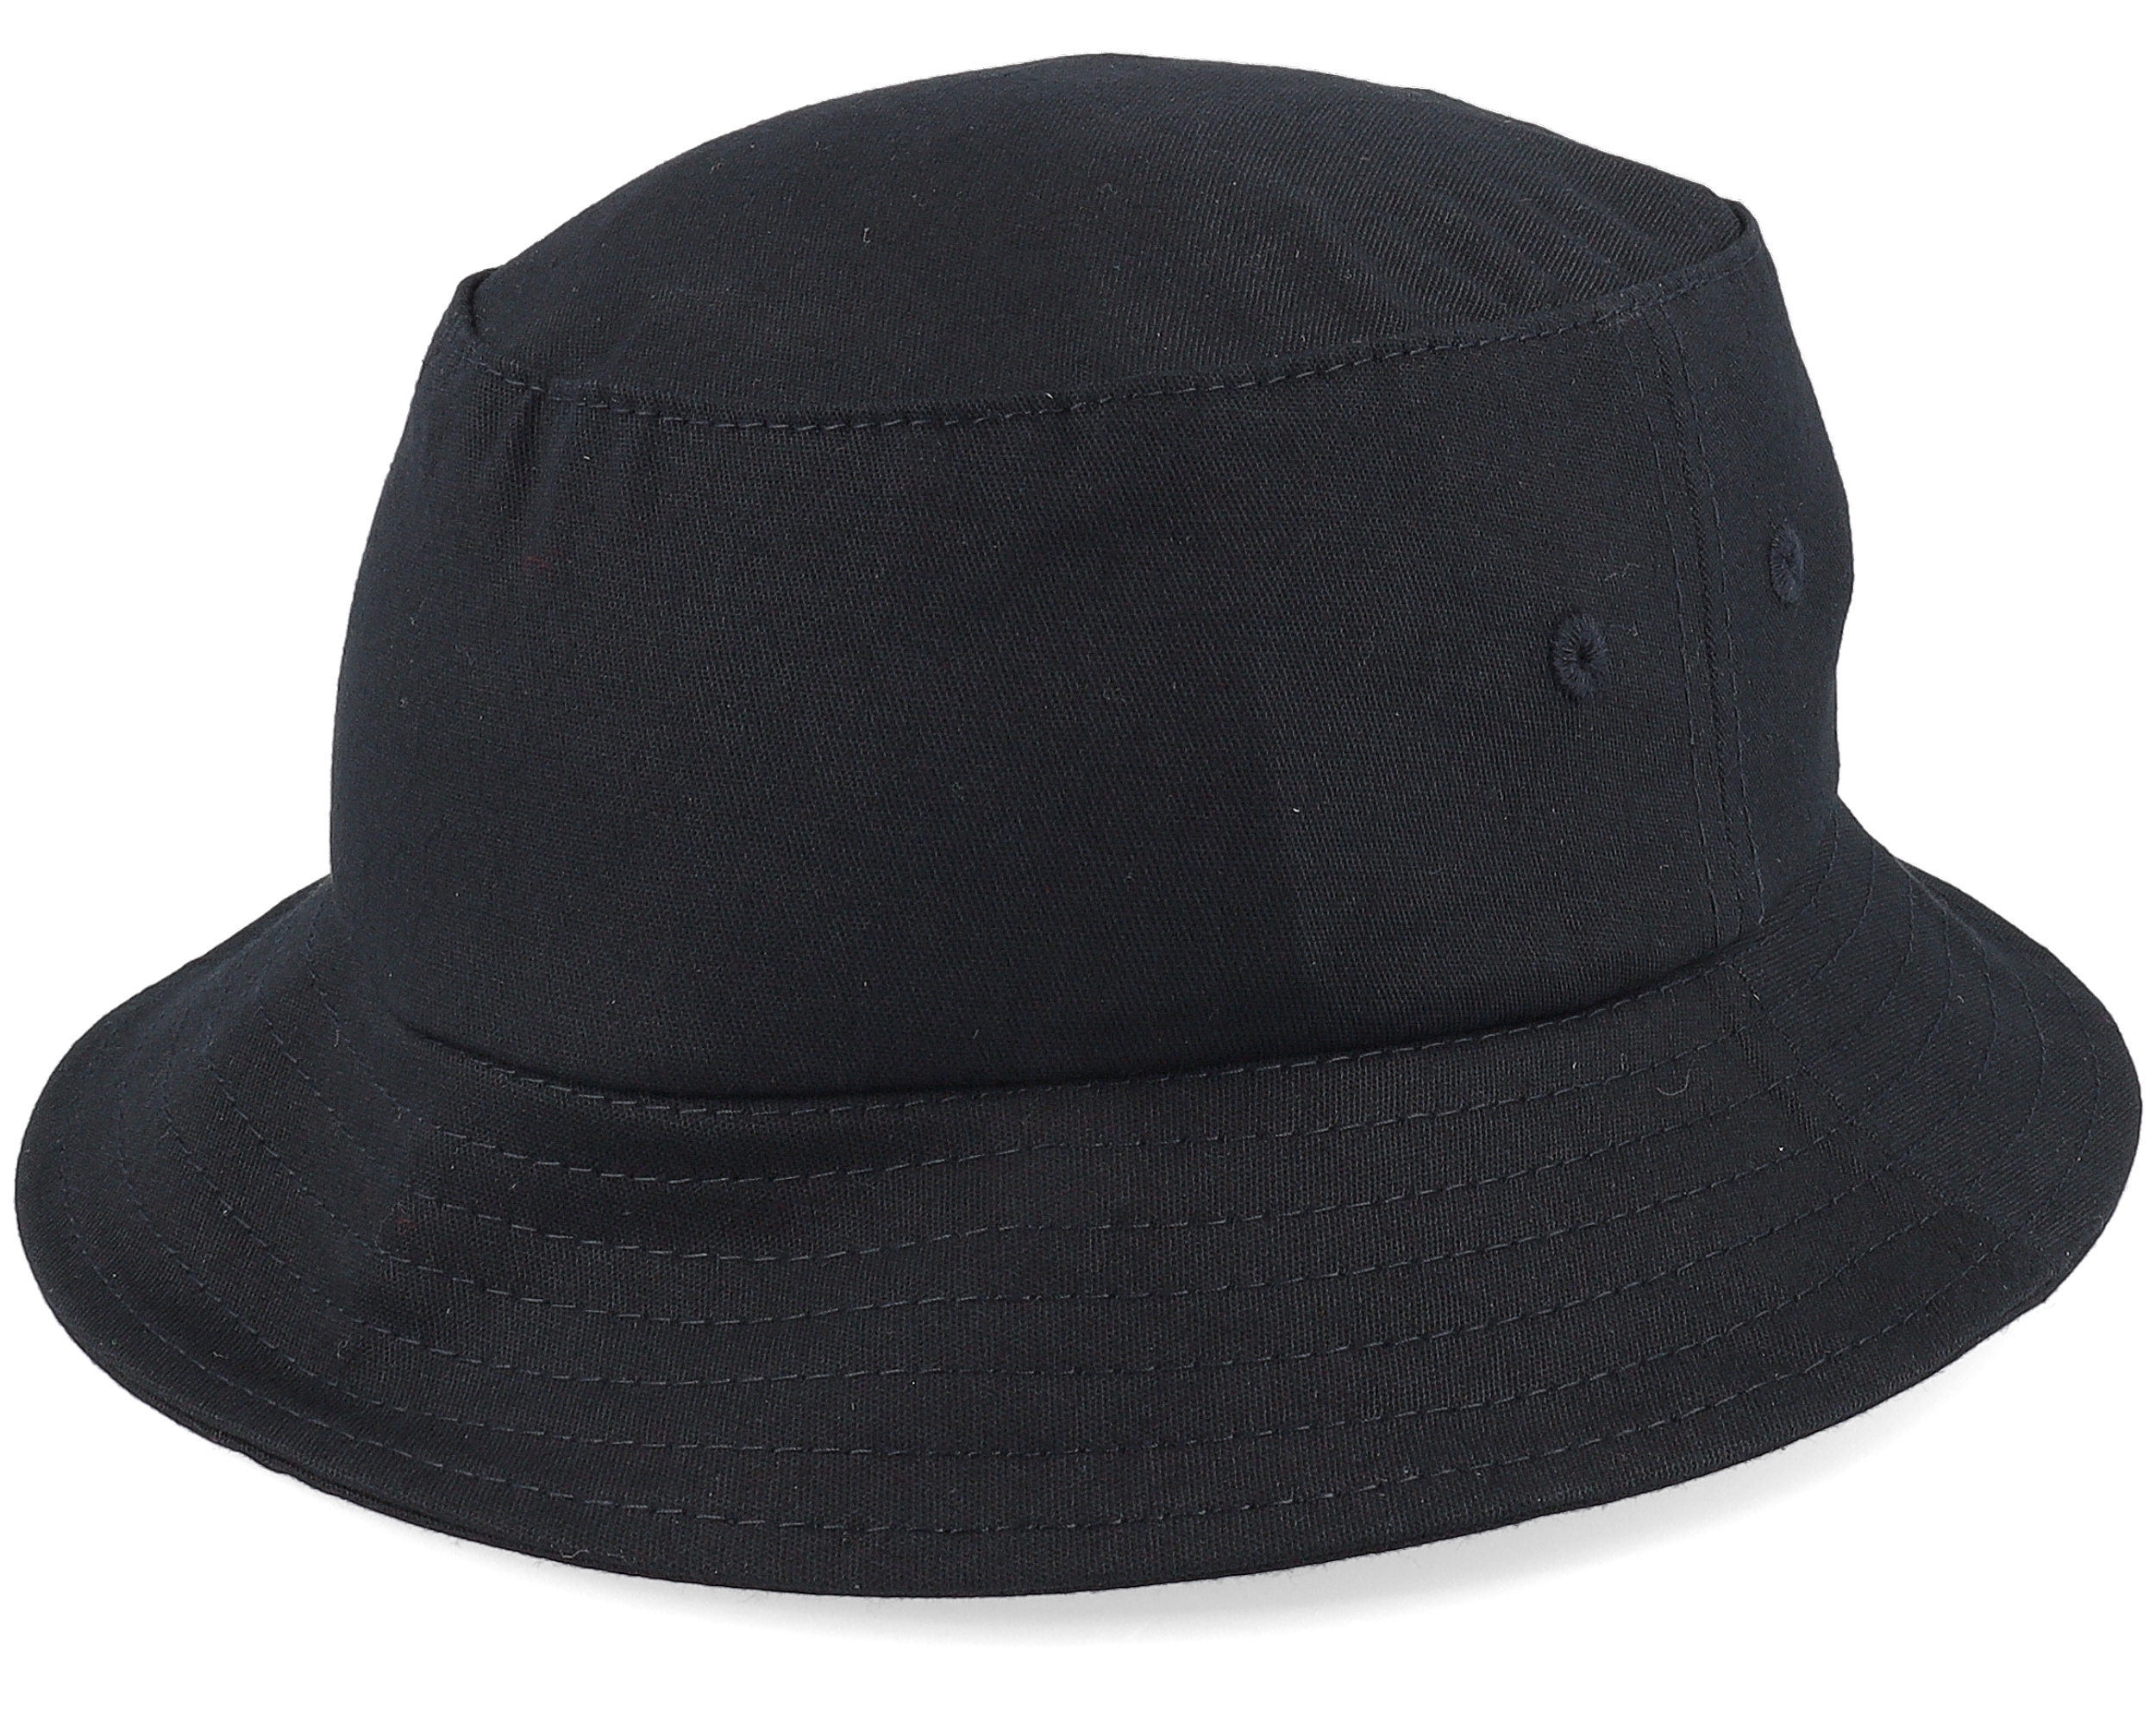 Kids Black Bucket hat - Flexfit